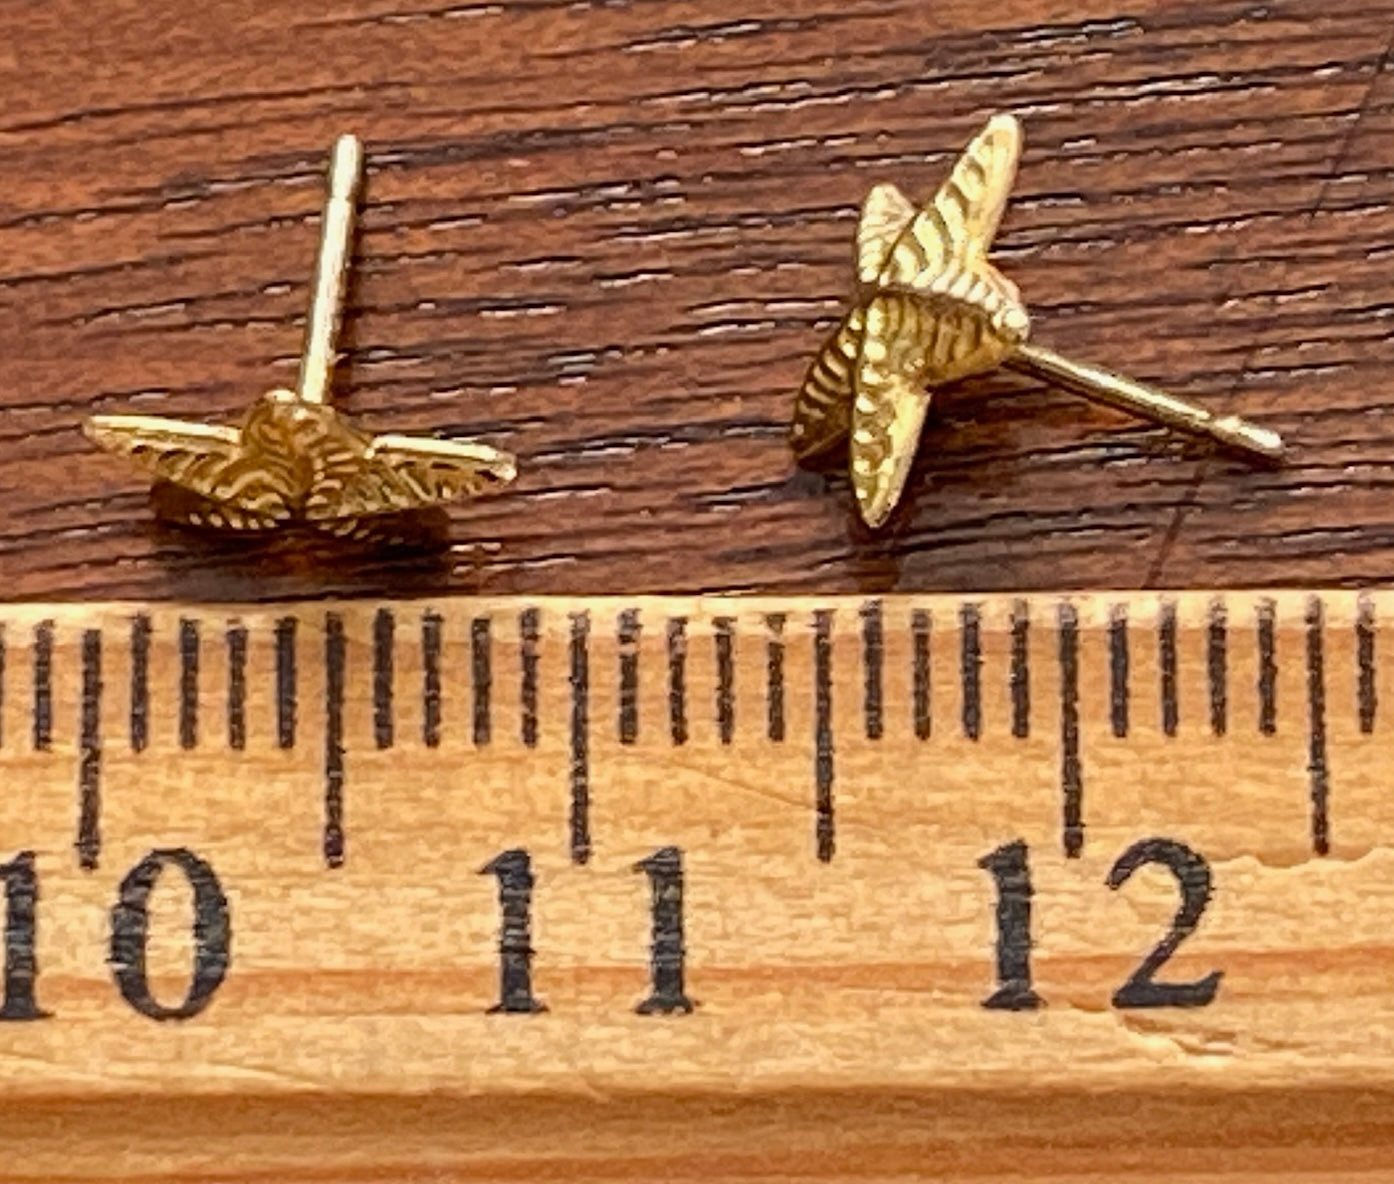 Sterling Silver 925 Gold Plate Starfish Pierced Stud Earrings